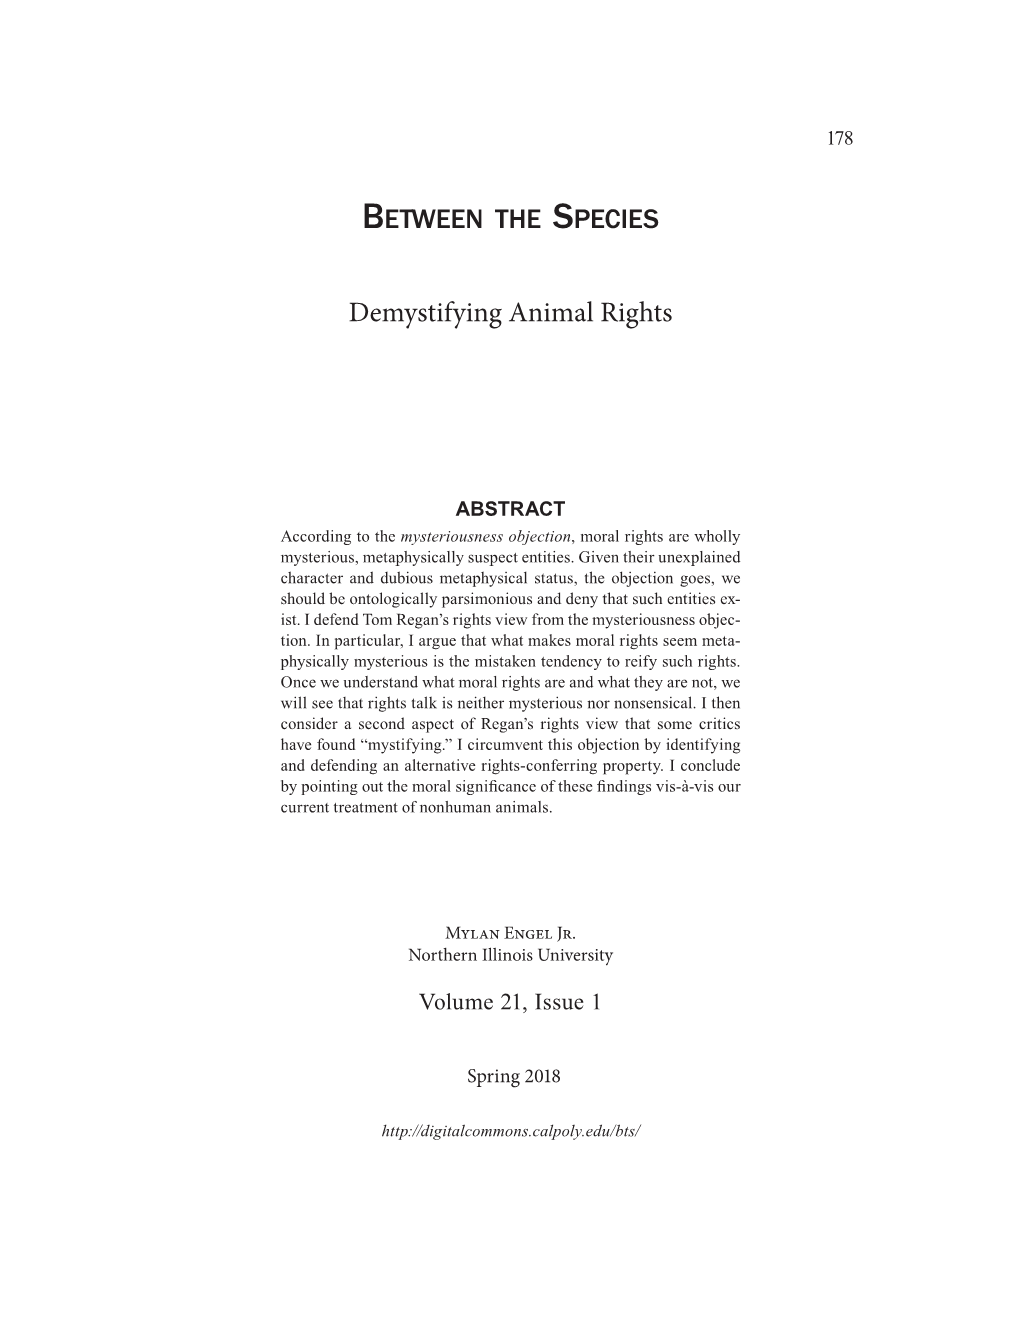 Demystifying Animal Rights